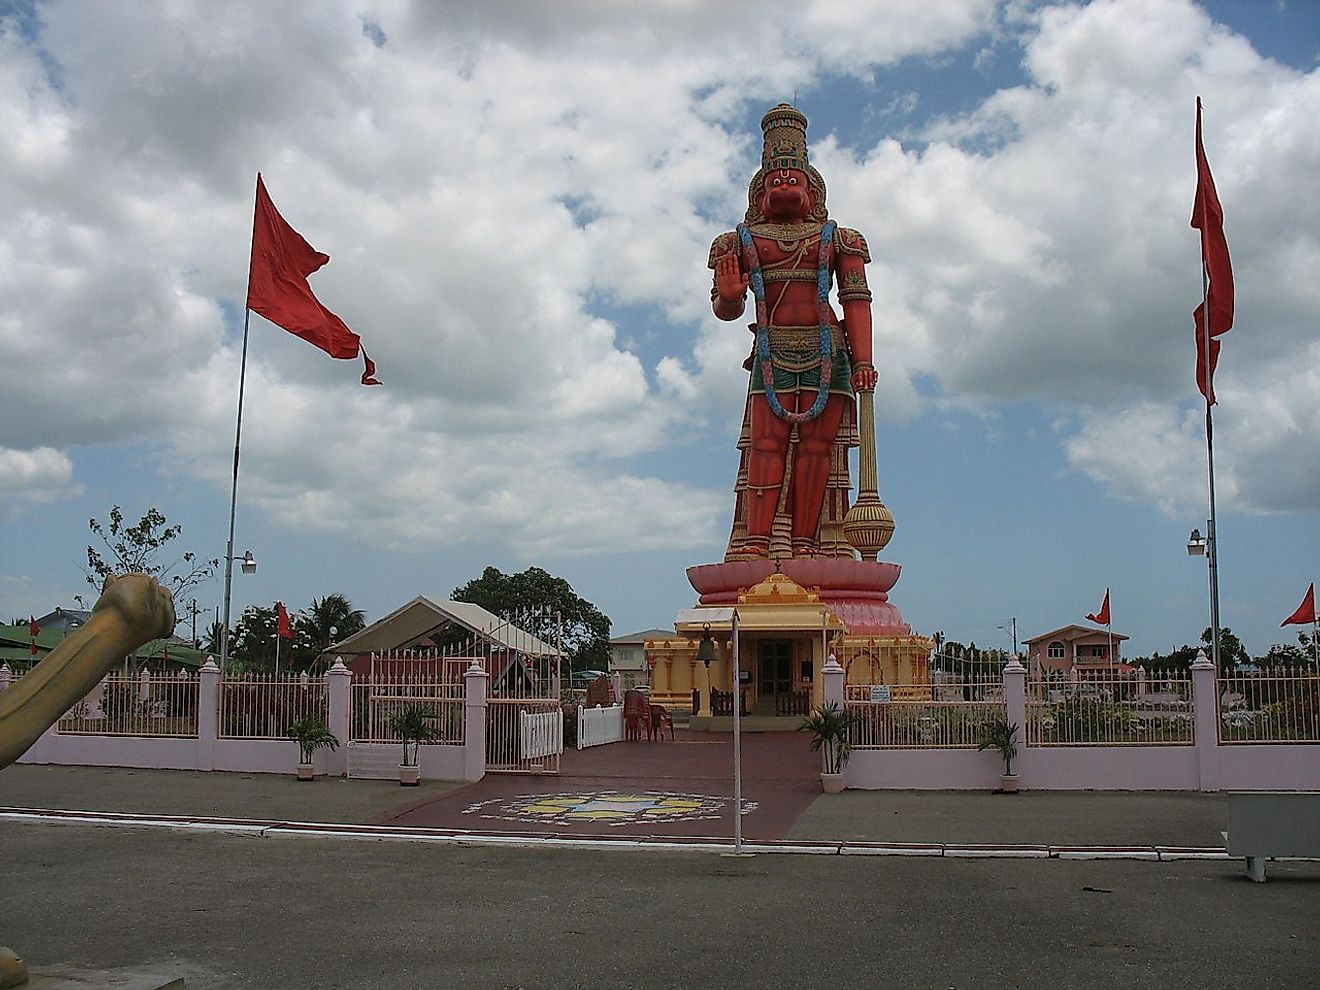 A Hindu temple in Trinidad and Tobago. Image credit: Wikimedia.org